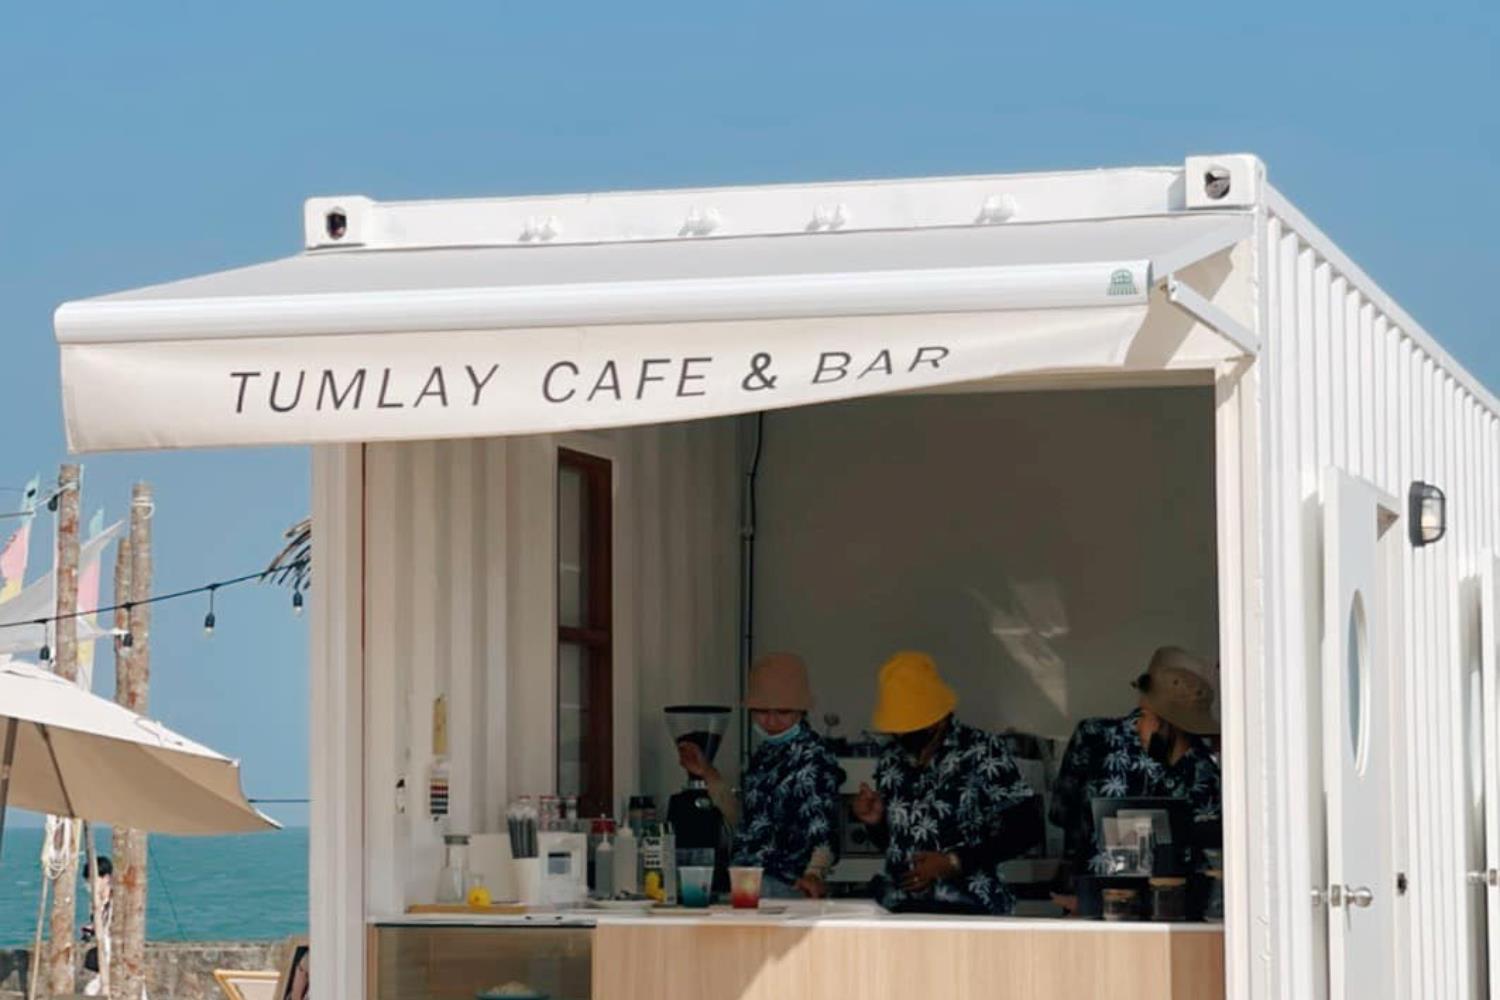 TUMLAY cafe and bar